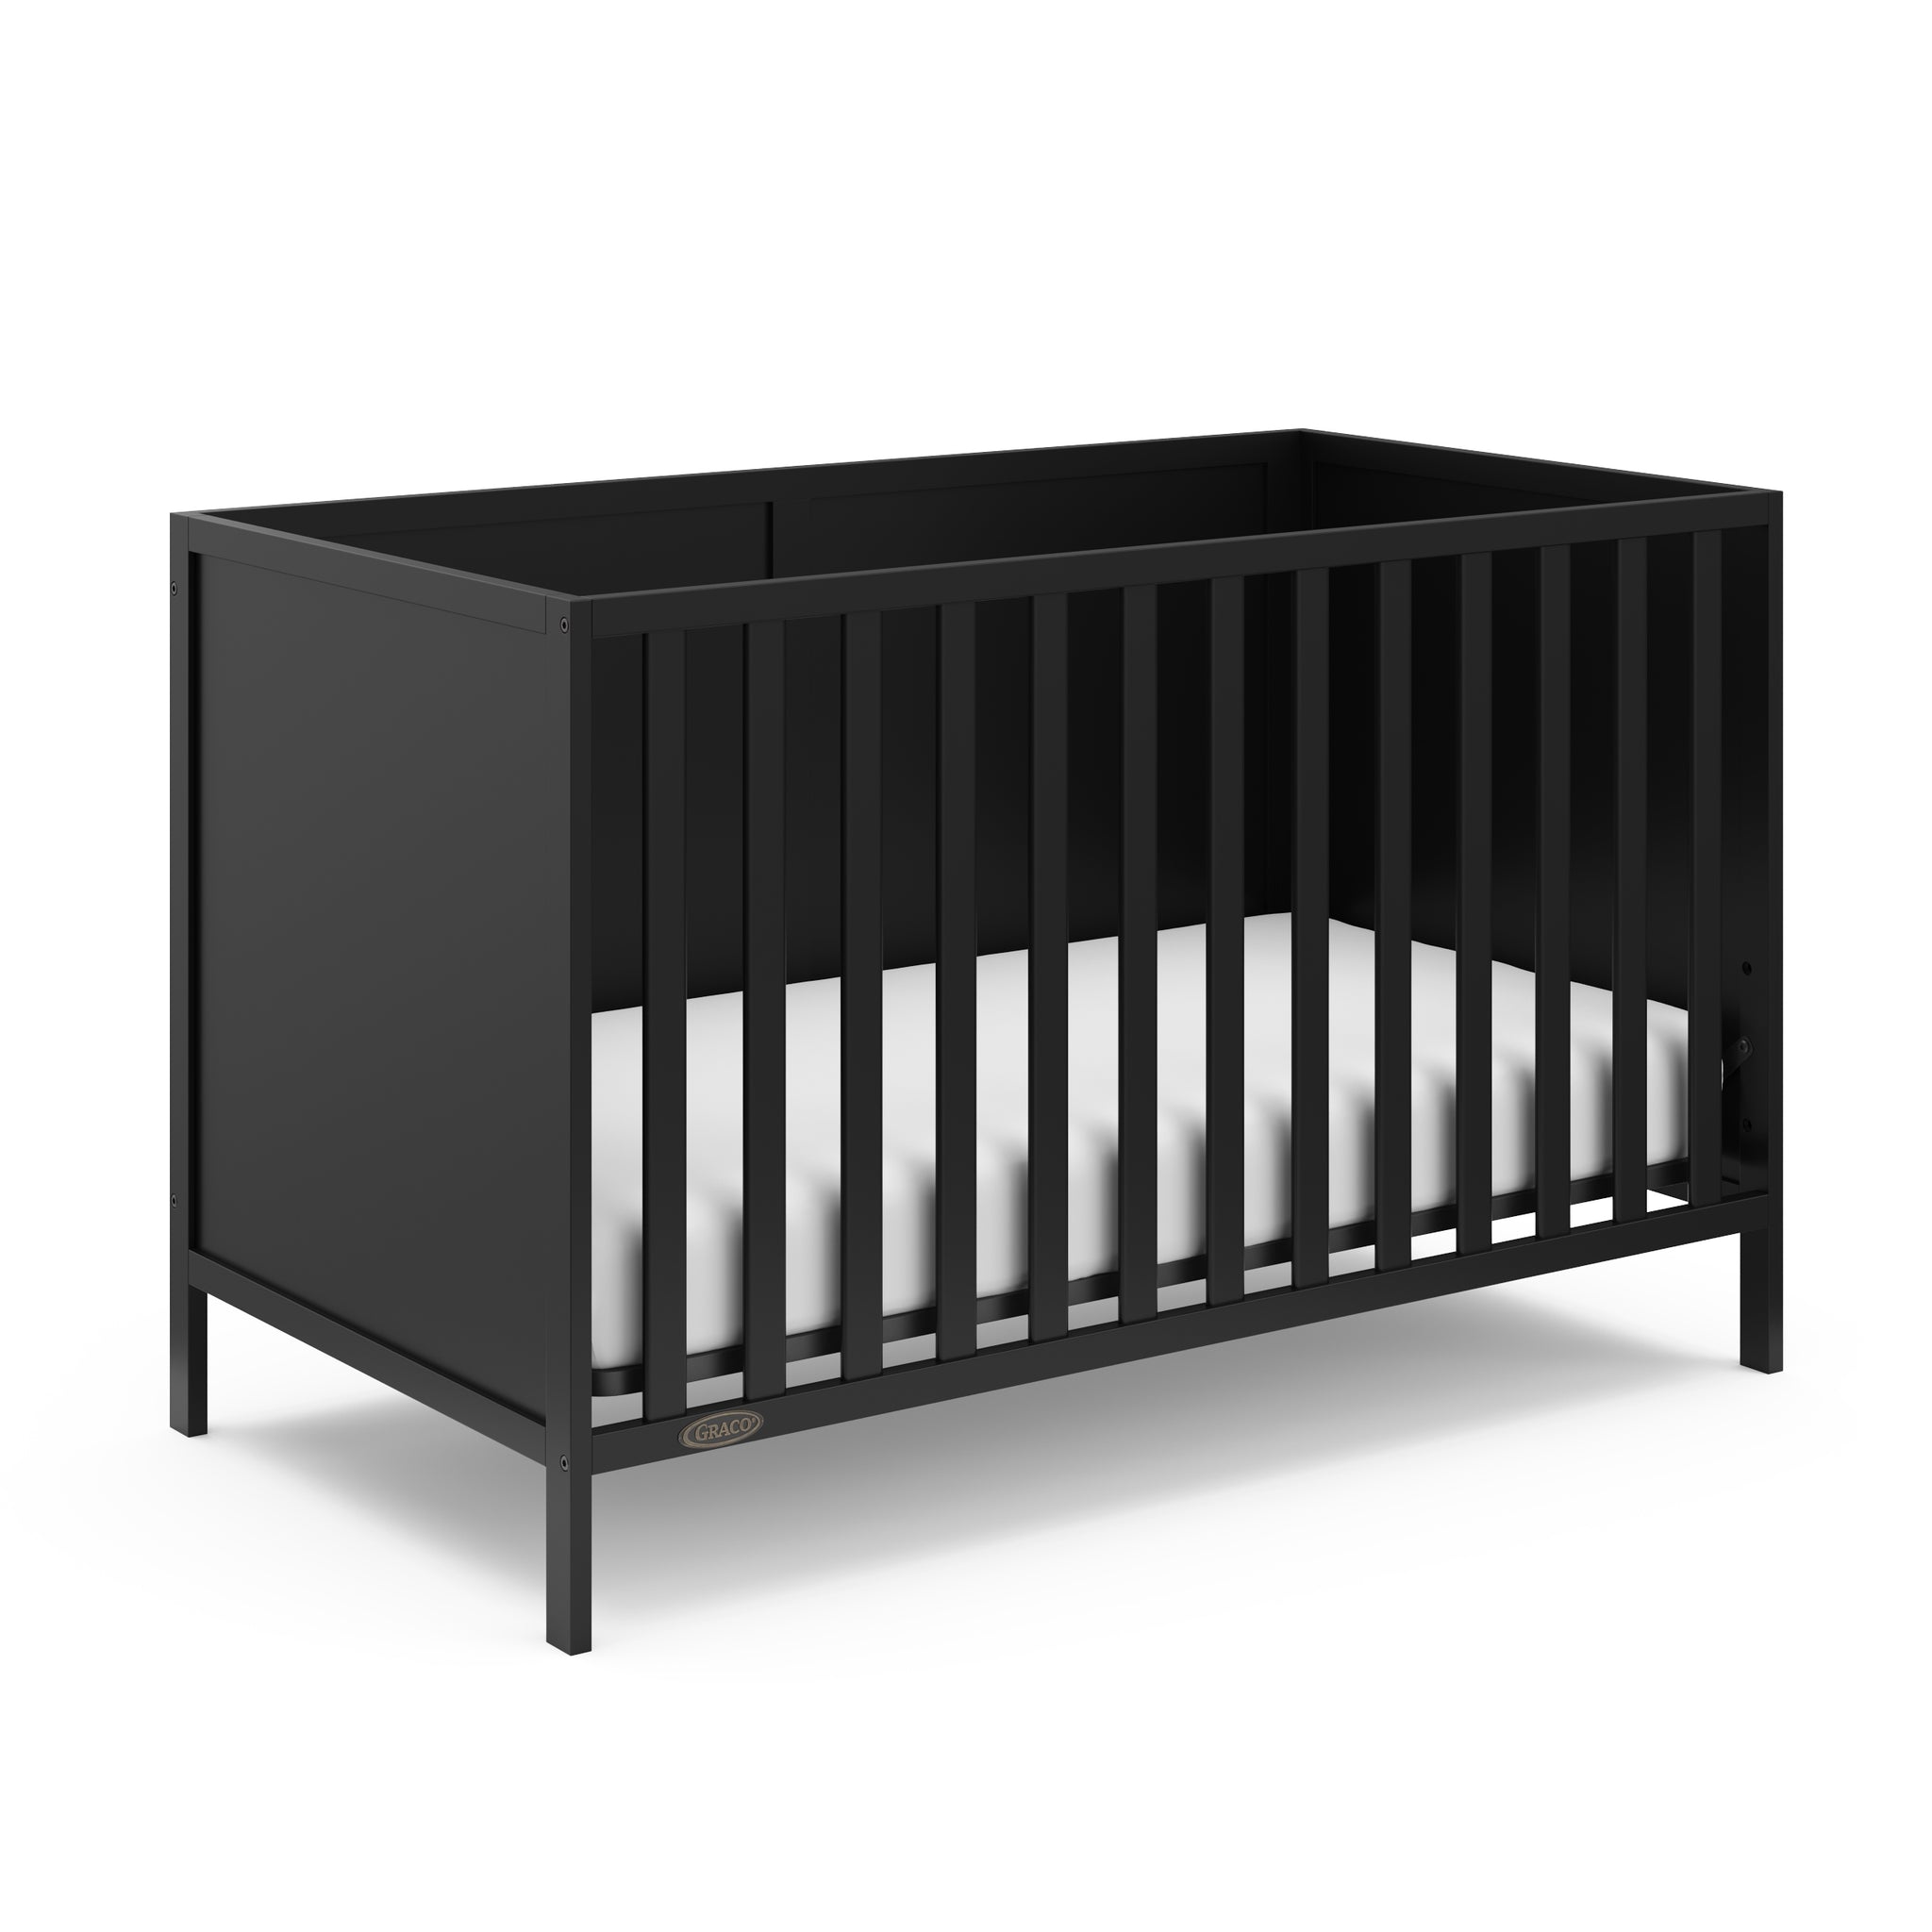 Black crib angled